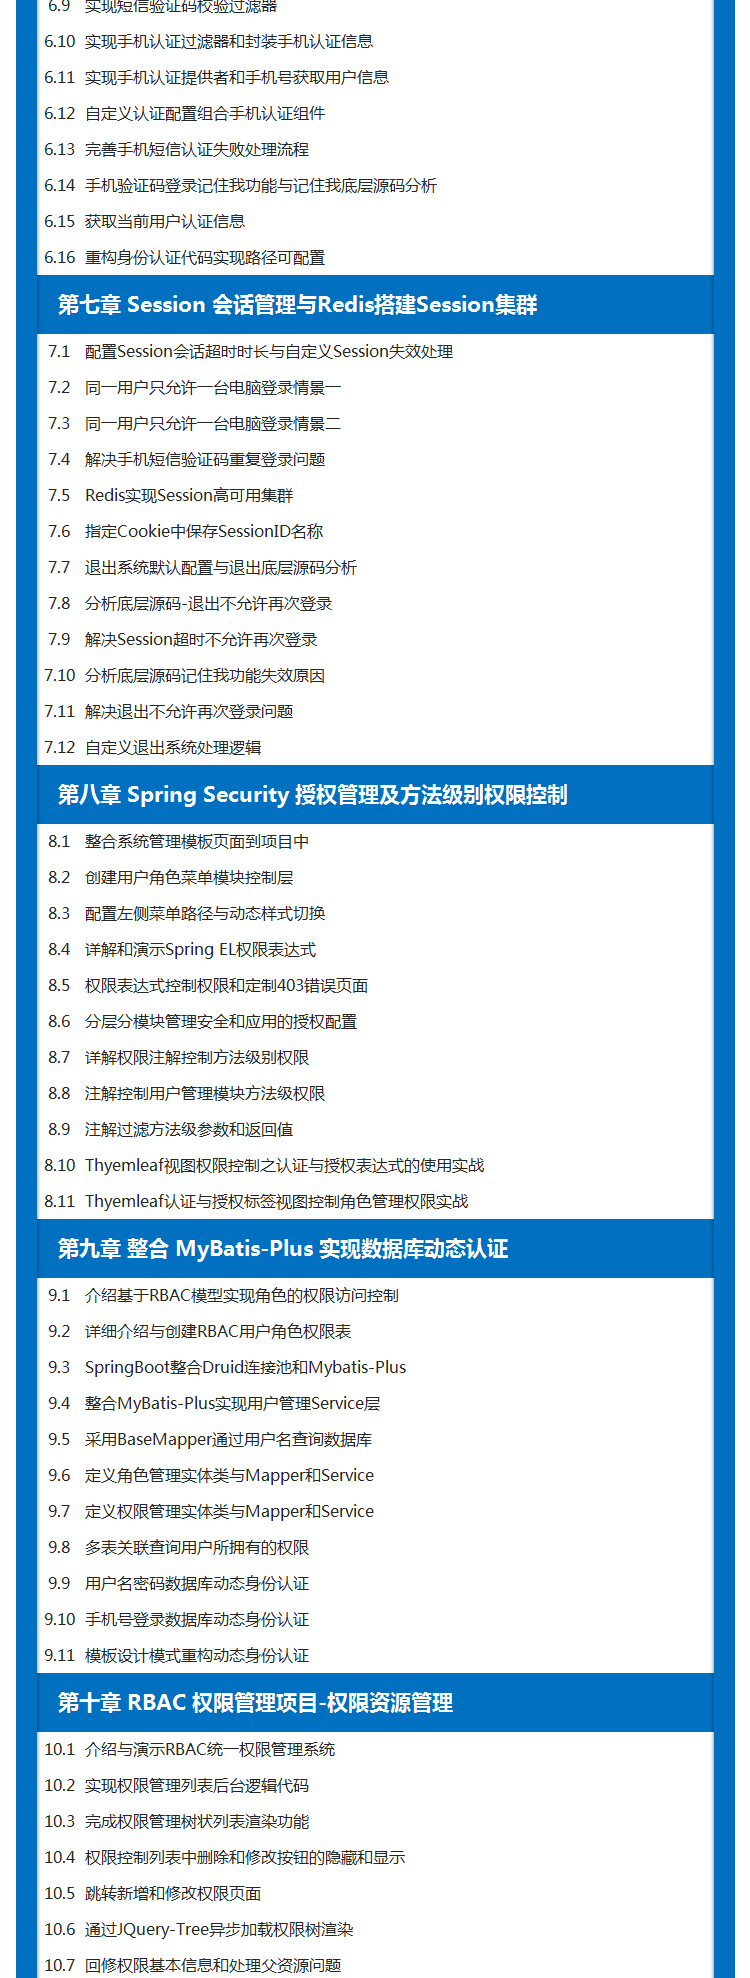 SpringSecurity宝贝详情v1修改版本1_04.jpg